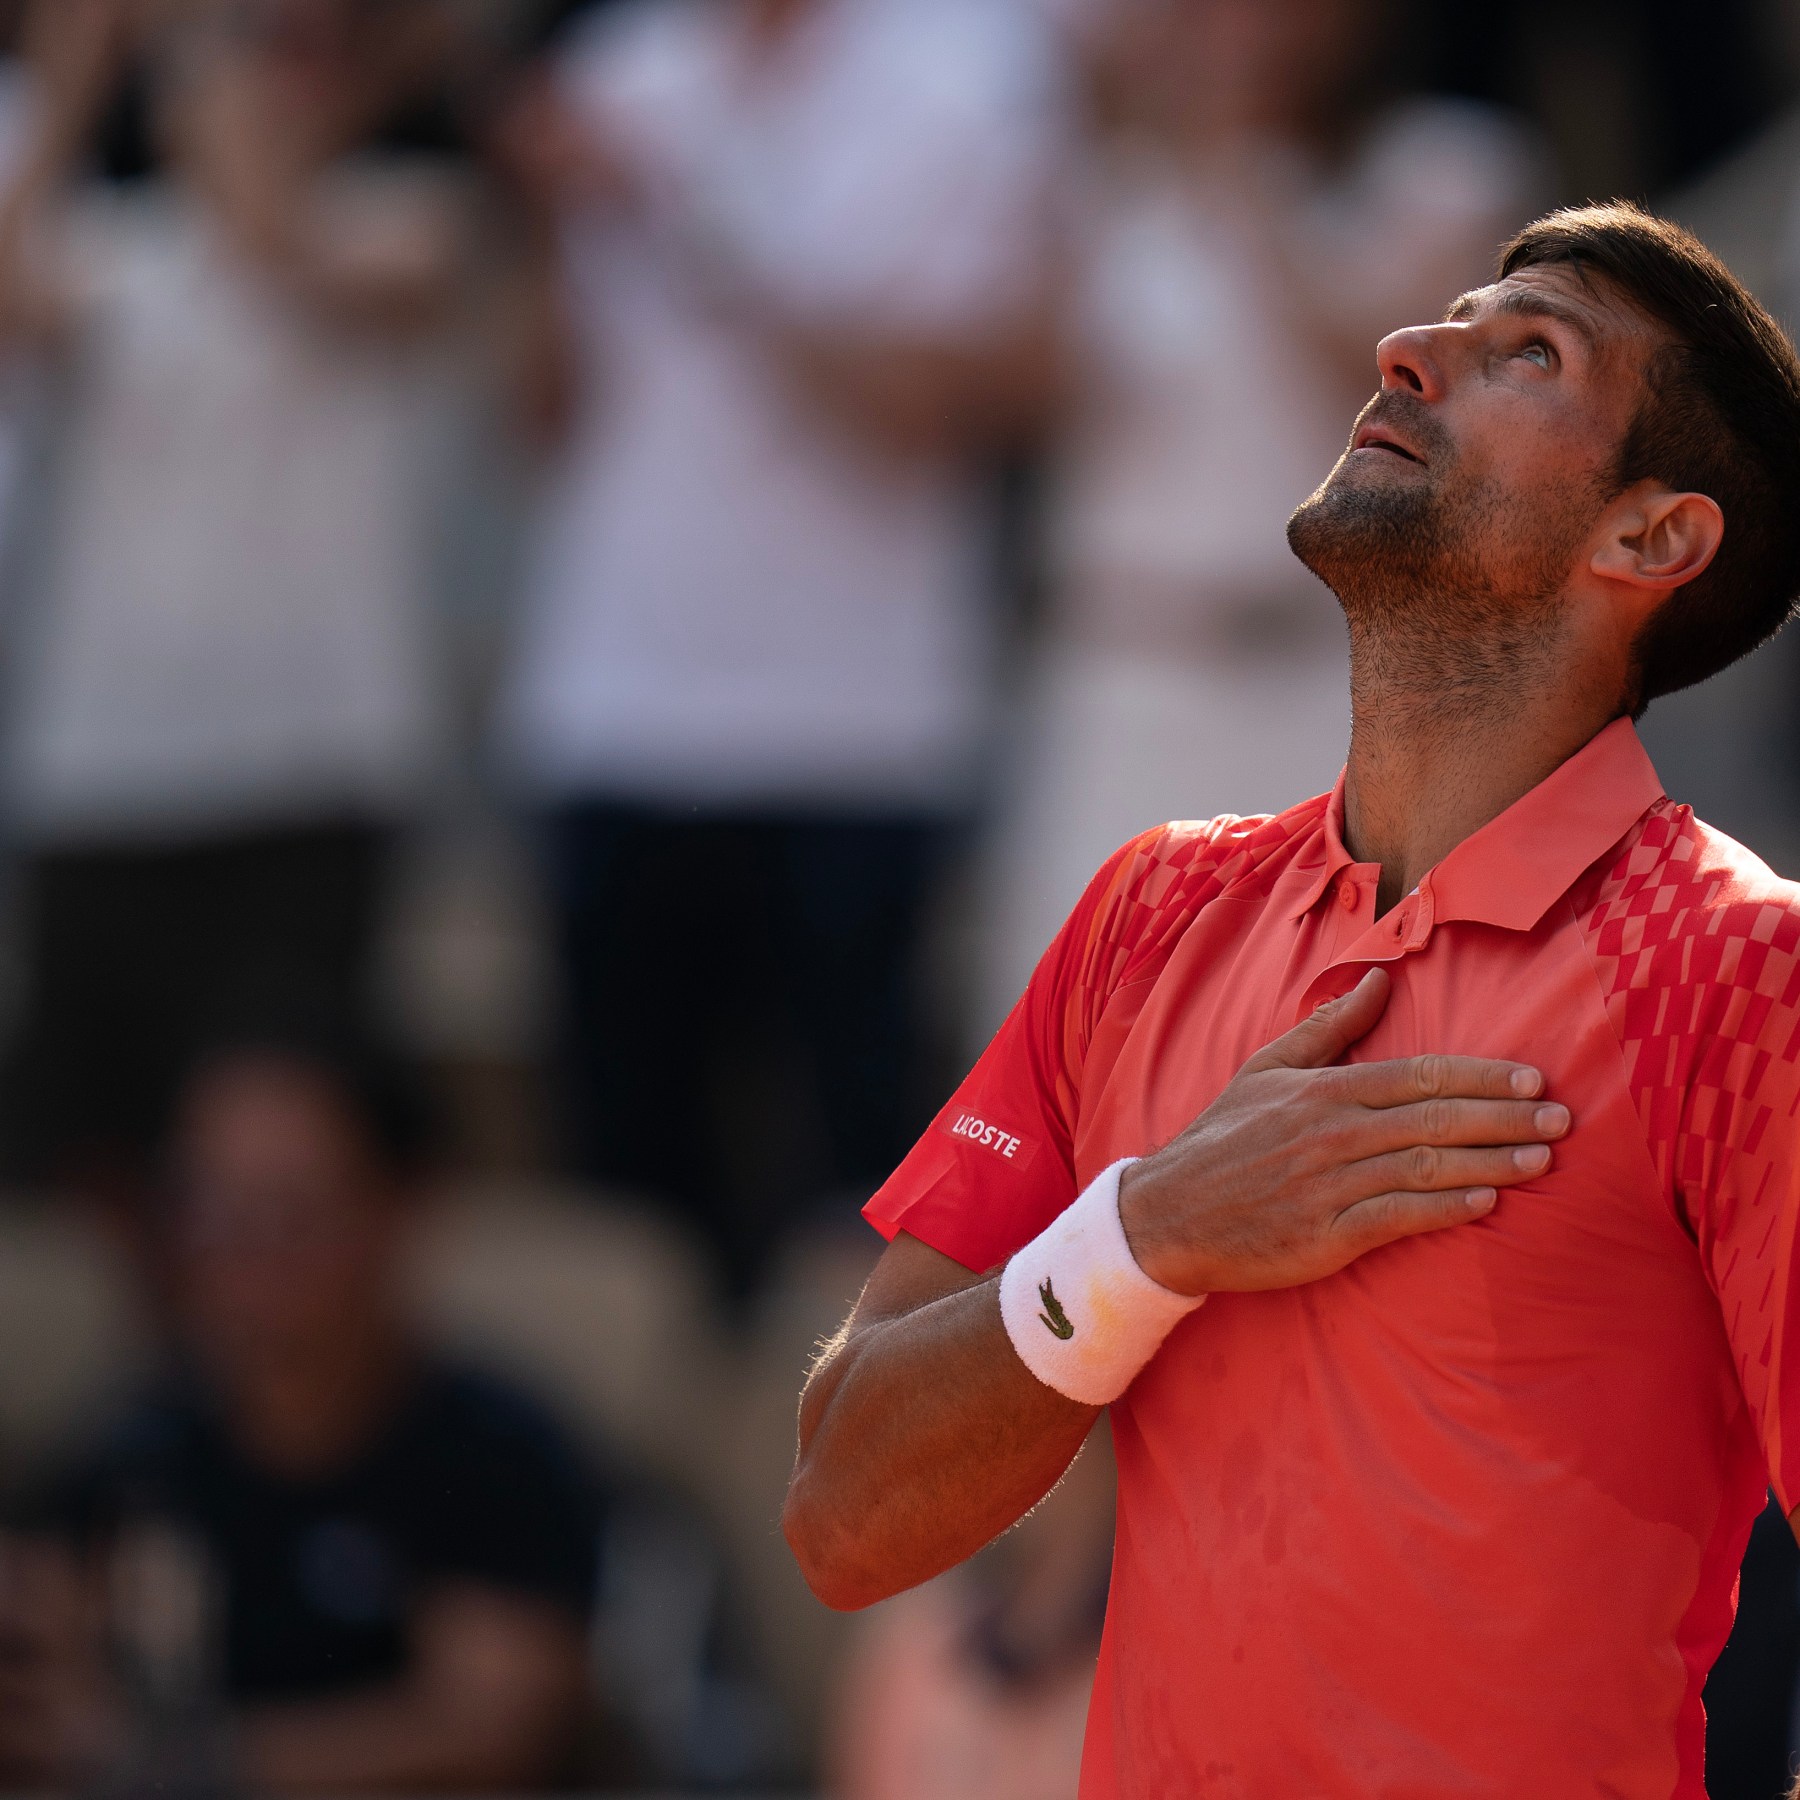 French Open  World number one Carlos Alcaraz, Novak Djokovic on